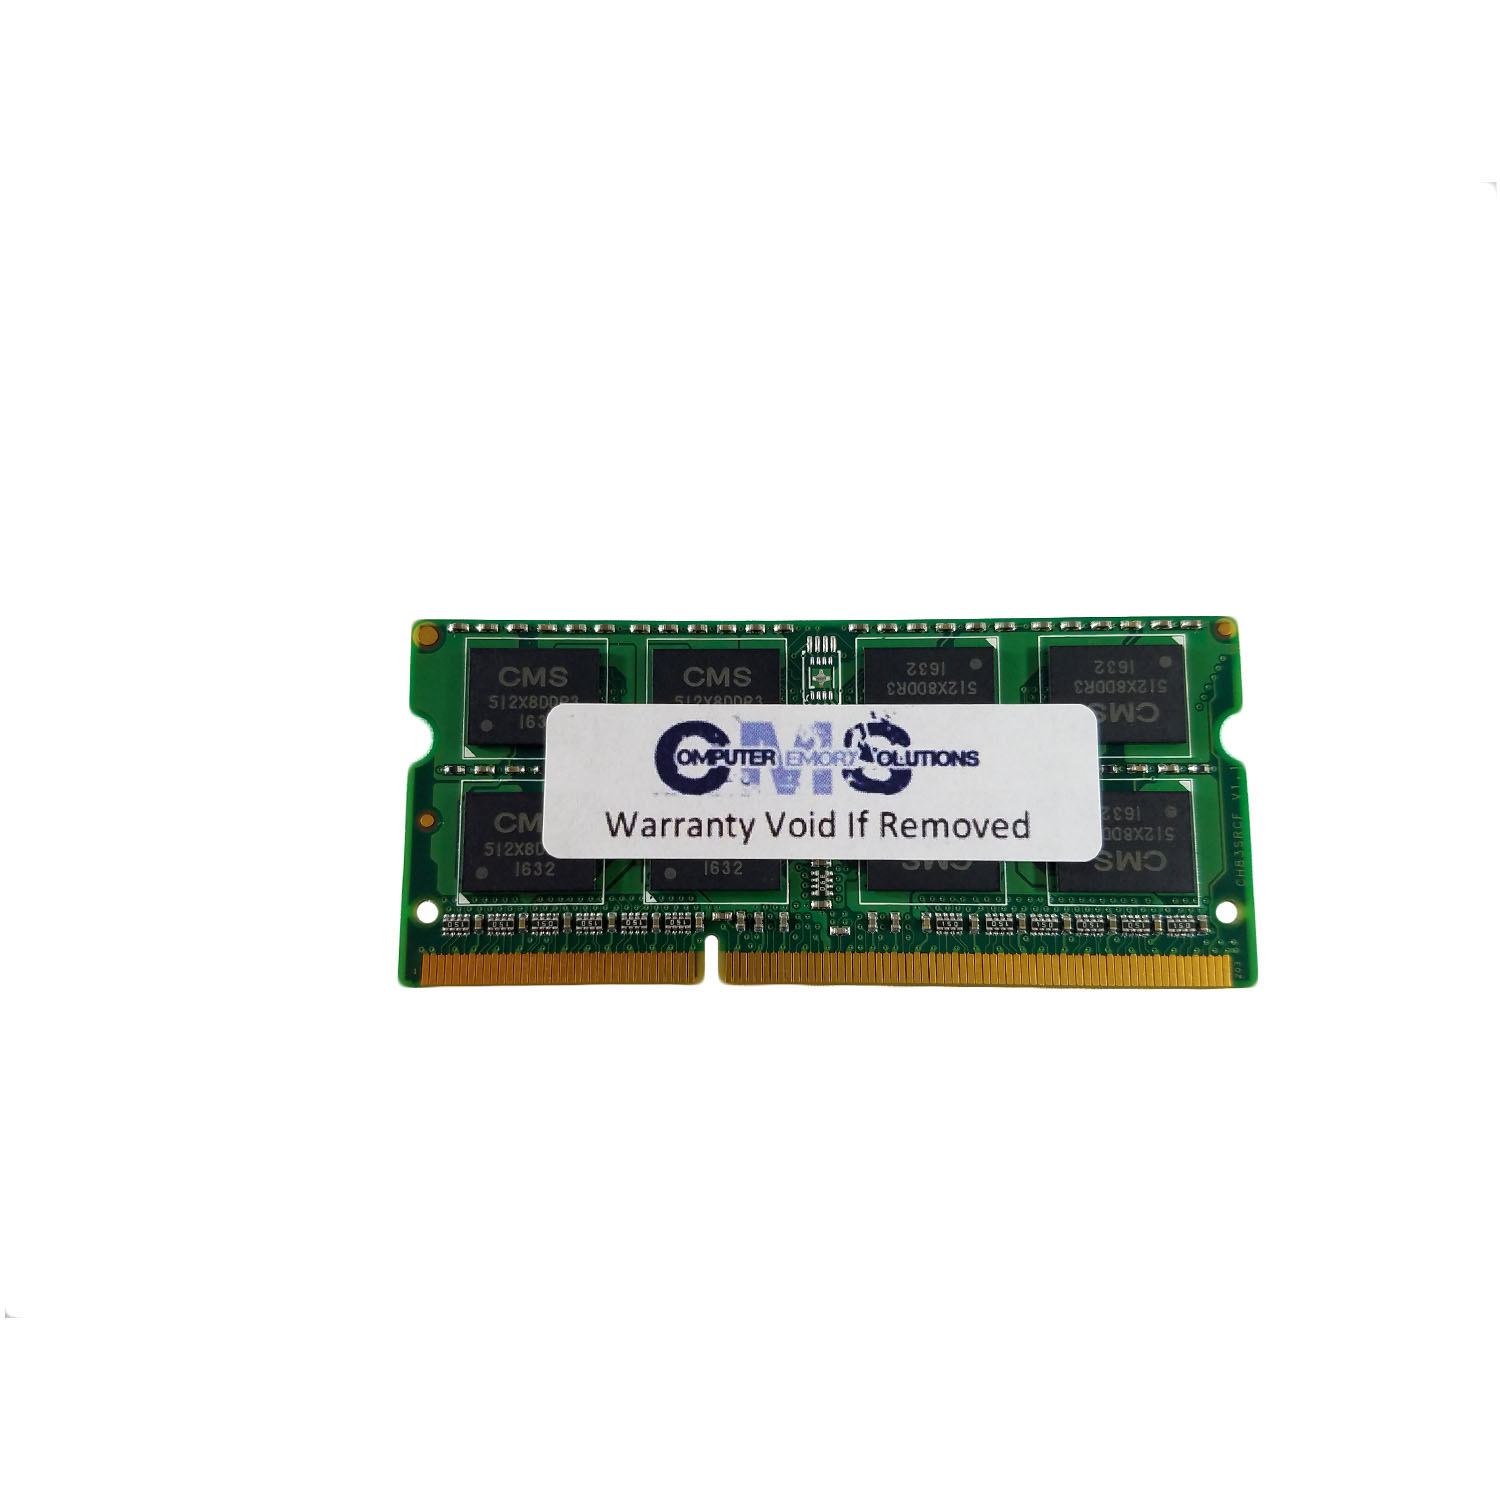 CMS 8GB (1x8GB) DDR3 12800 1600MHz NON ECC SODIMM Memory Ram Upgrade Compatible with Lenovo® Lenovo® Yoga 700-14ISK - A8 - image 1 of 3